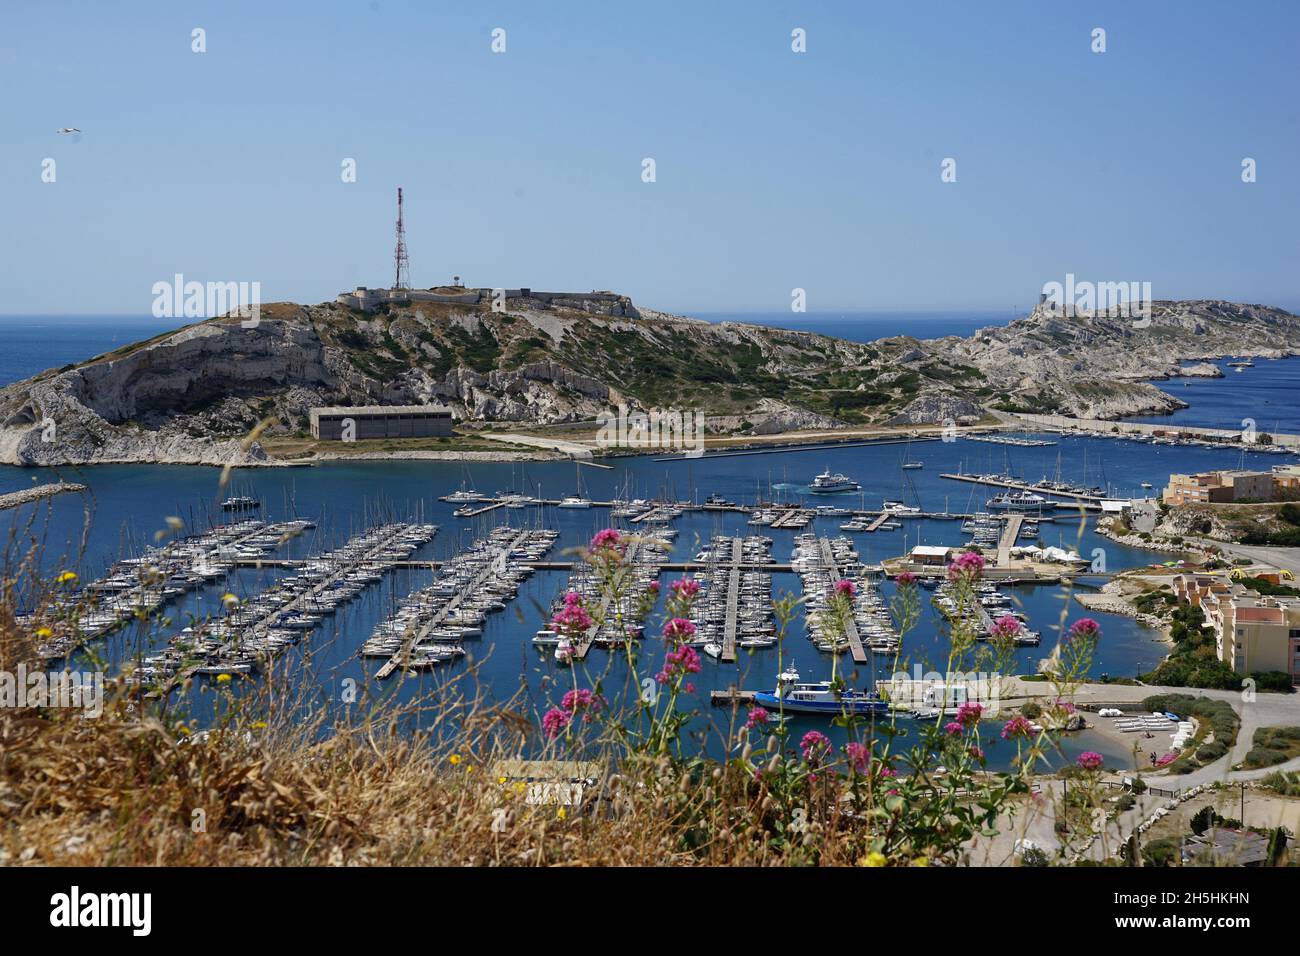 View from Ile Pomegues to Port de Friaoul and Ile Ratonneau, Friaoul Islands, Marseille, Mediterranean Sea, Archipelago du Frioul, France Stock Photo